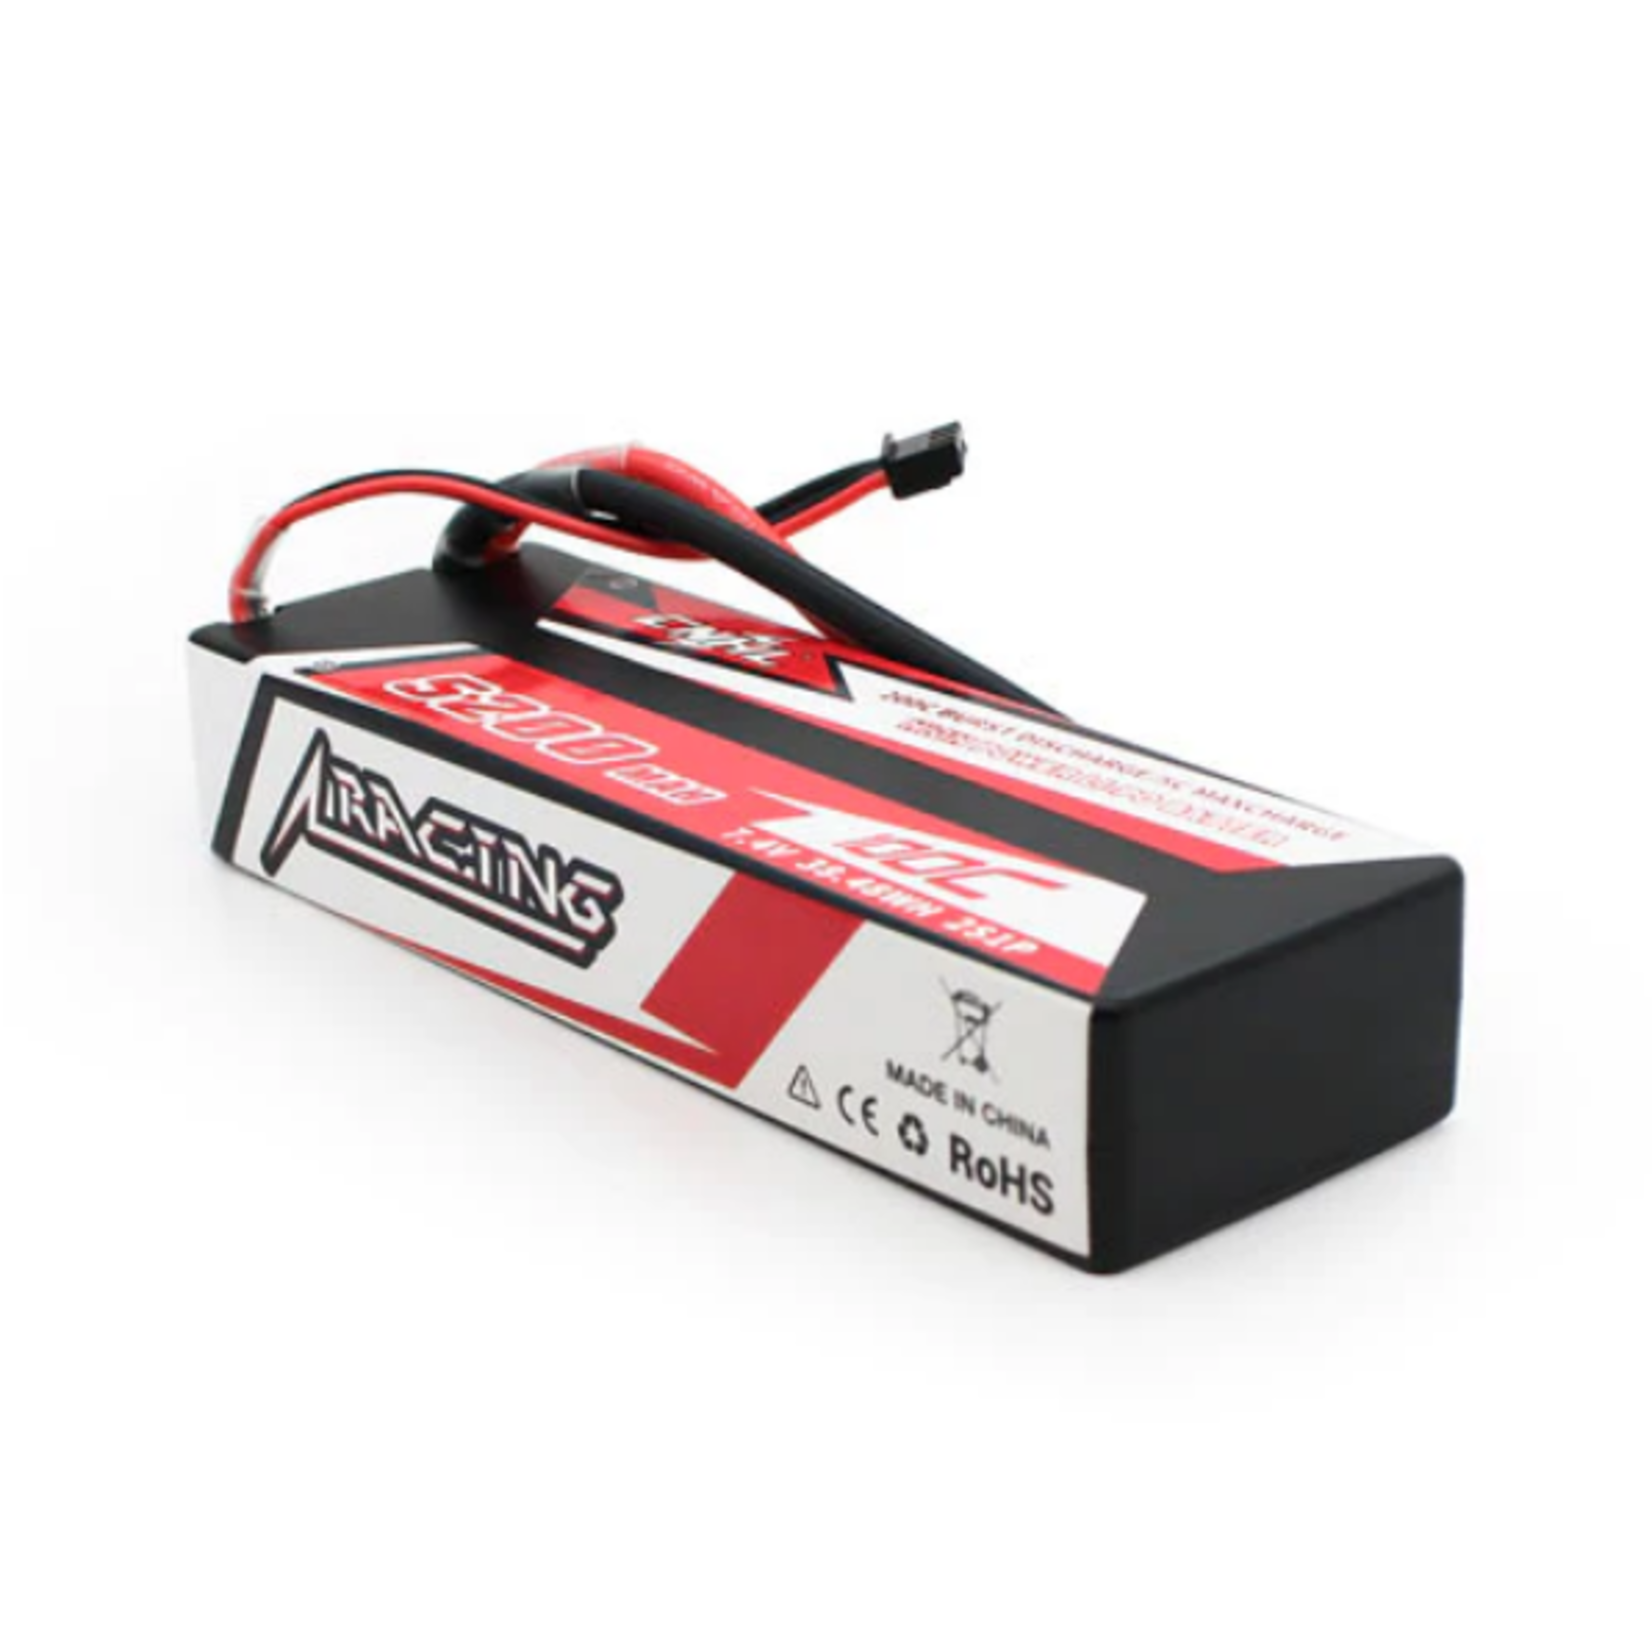 CNHL Racing CNHL Racing Series 5200mAh 7.4V 2S 100C LiPo Battery Hard Case w/Deans Plug #HC5201002